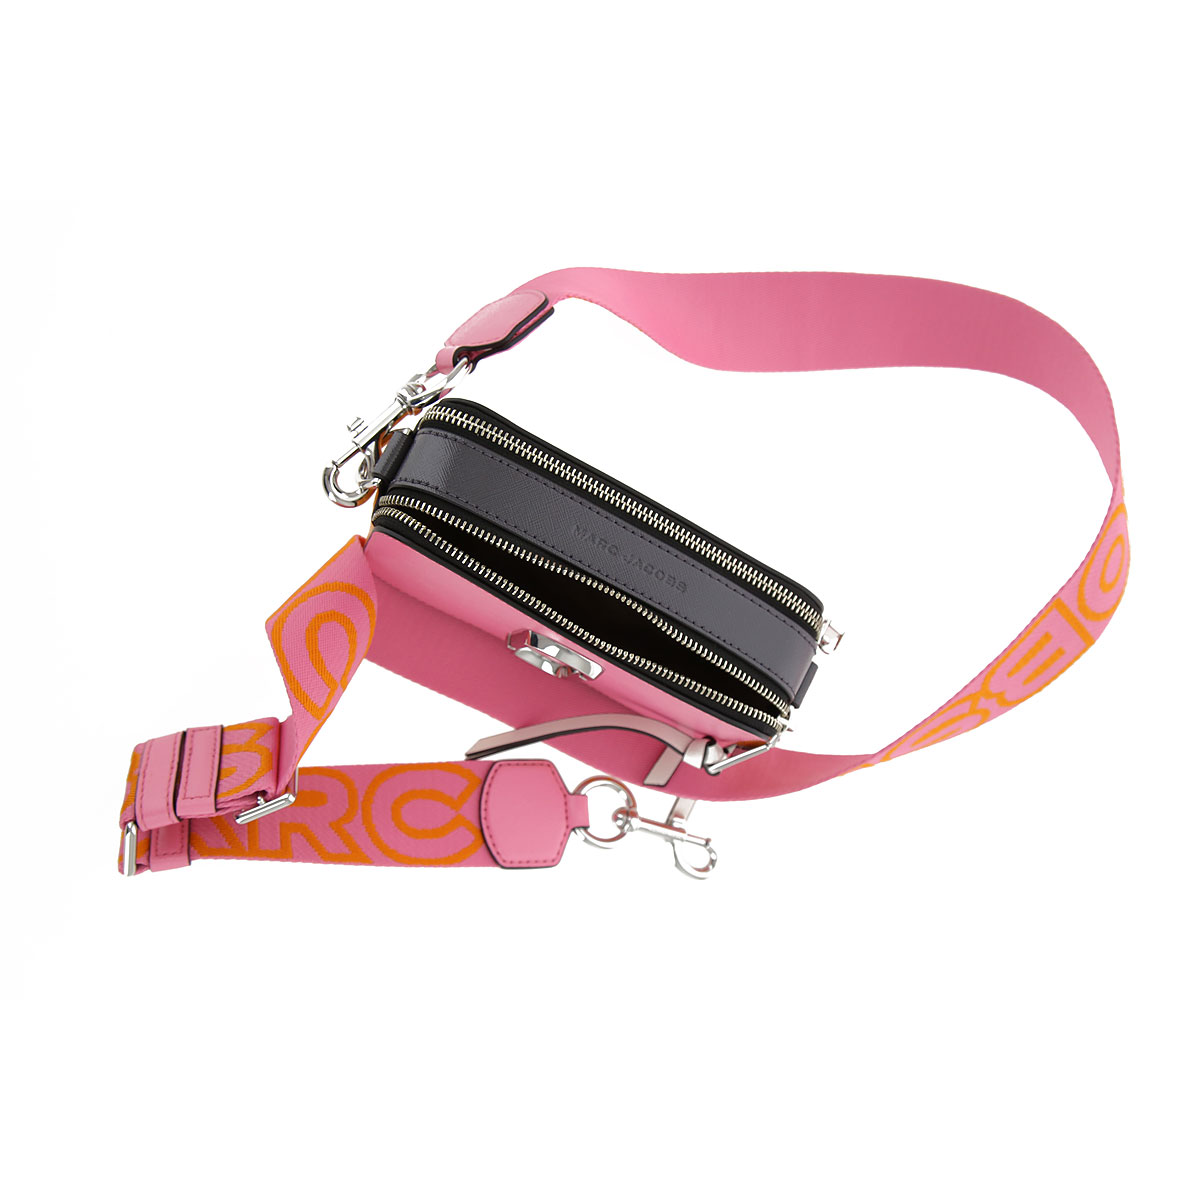 Handbags Marc Jacobs, Style code: 2s3hcr500h03-676